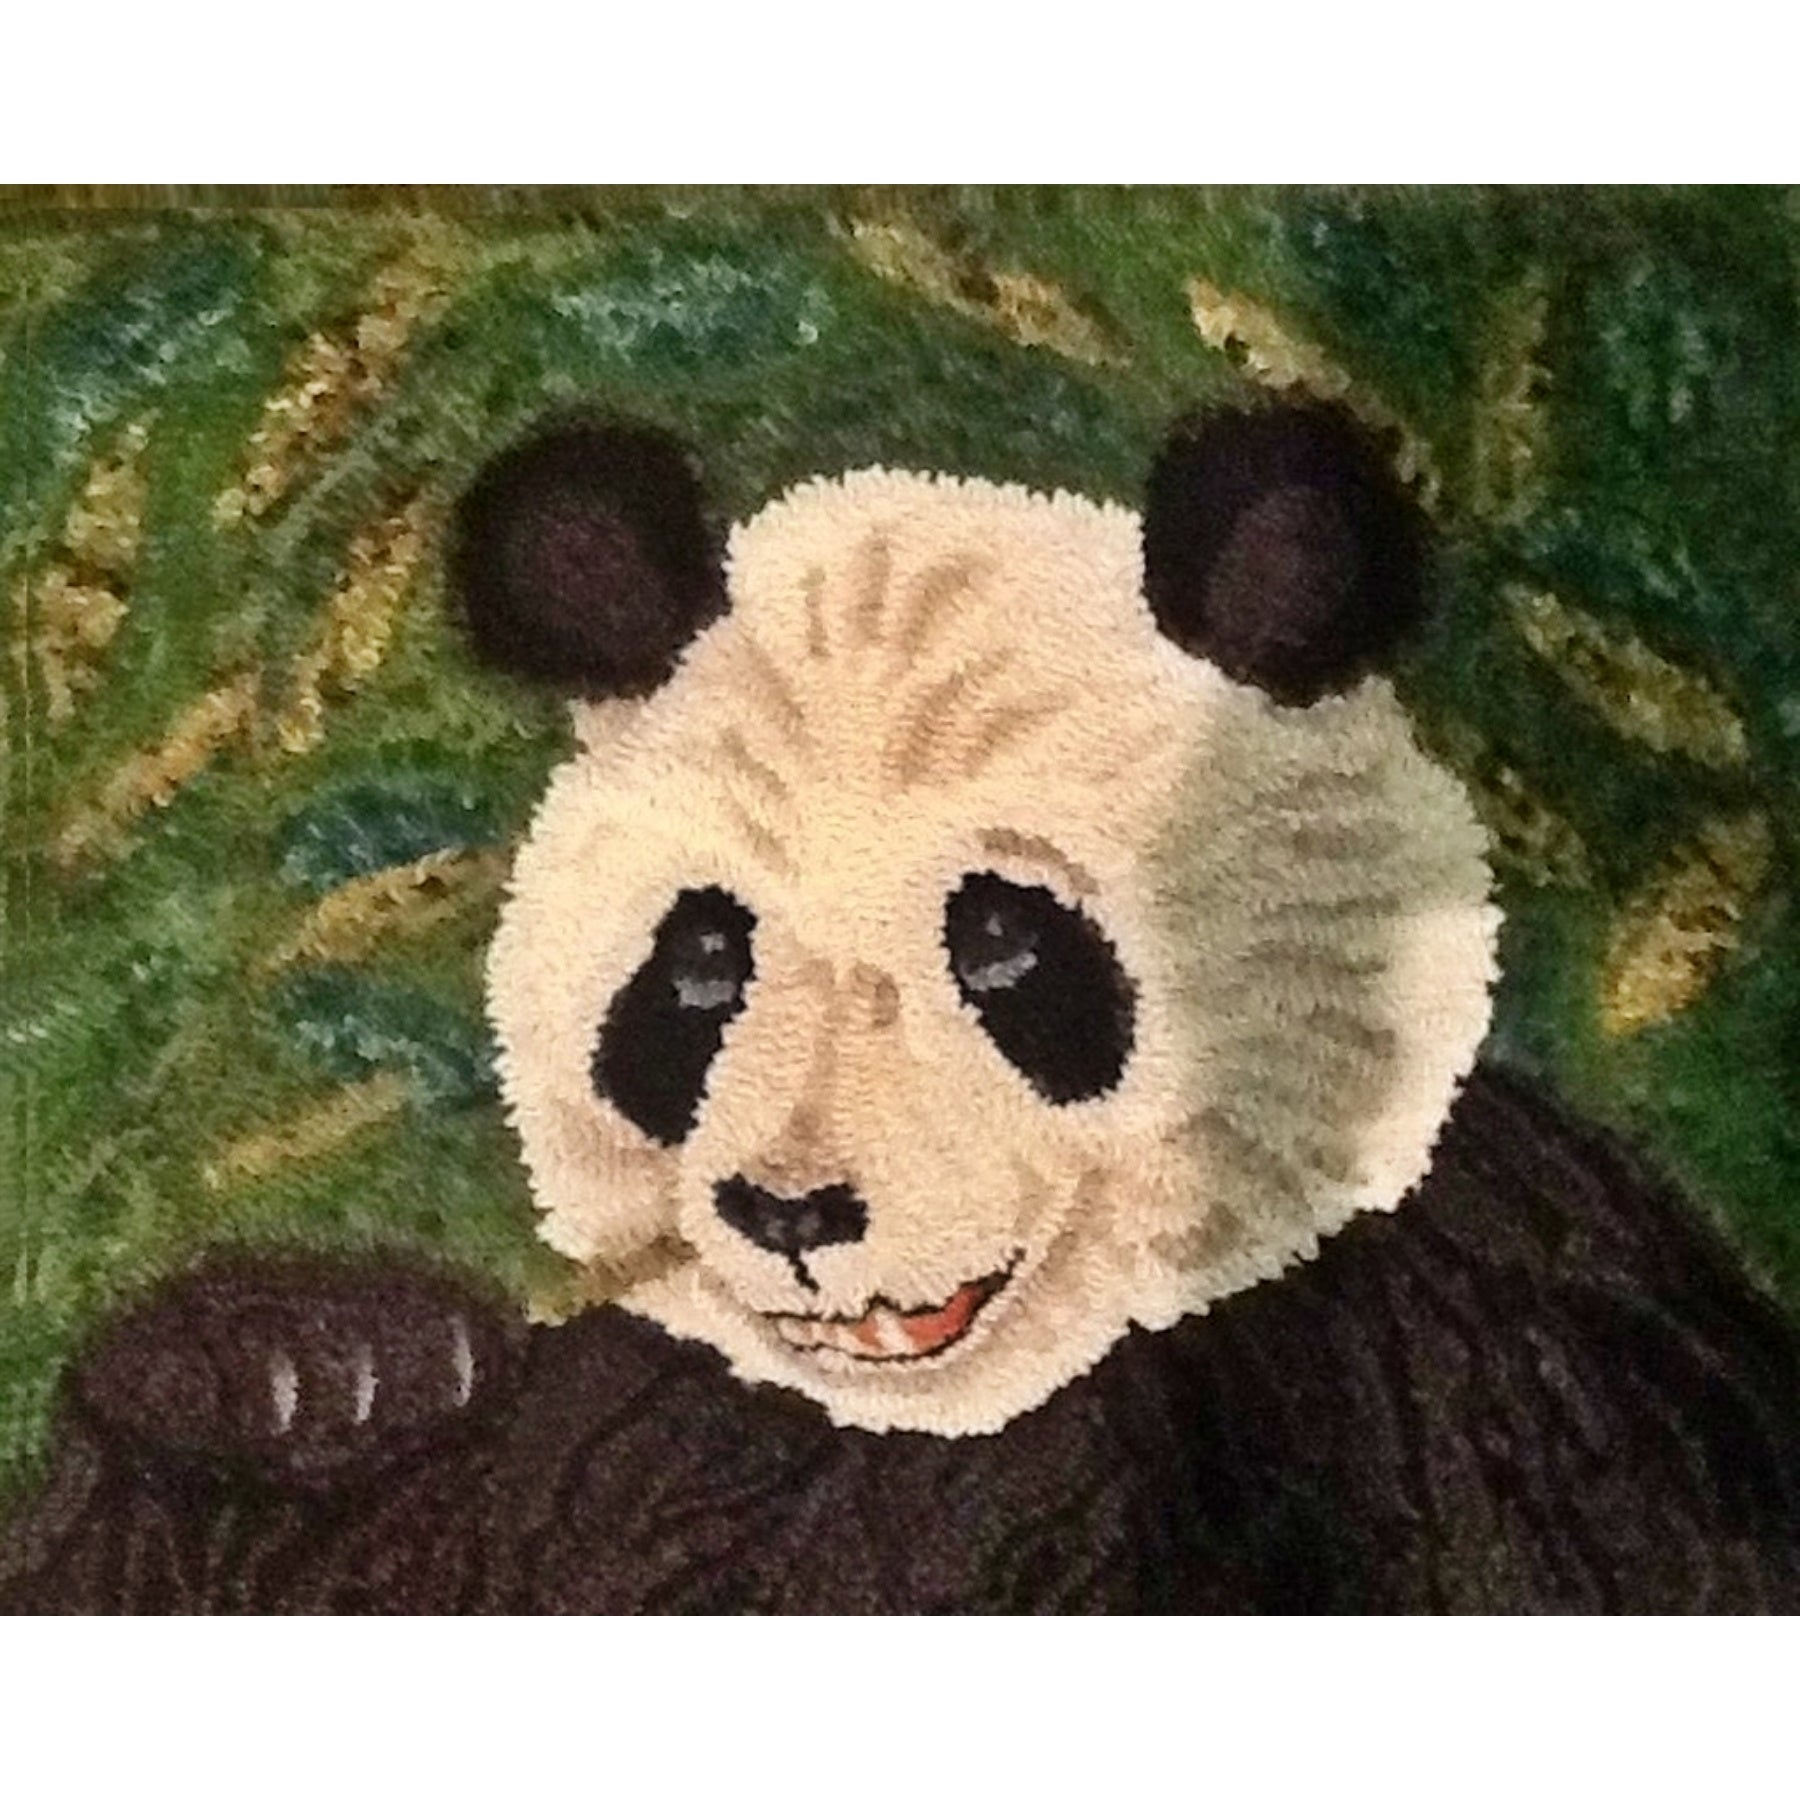 Panda Bear, rug hooked by Pam Bartlett